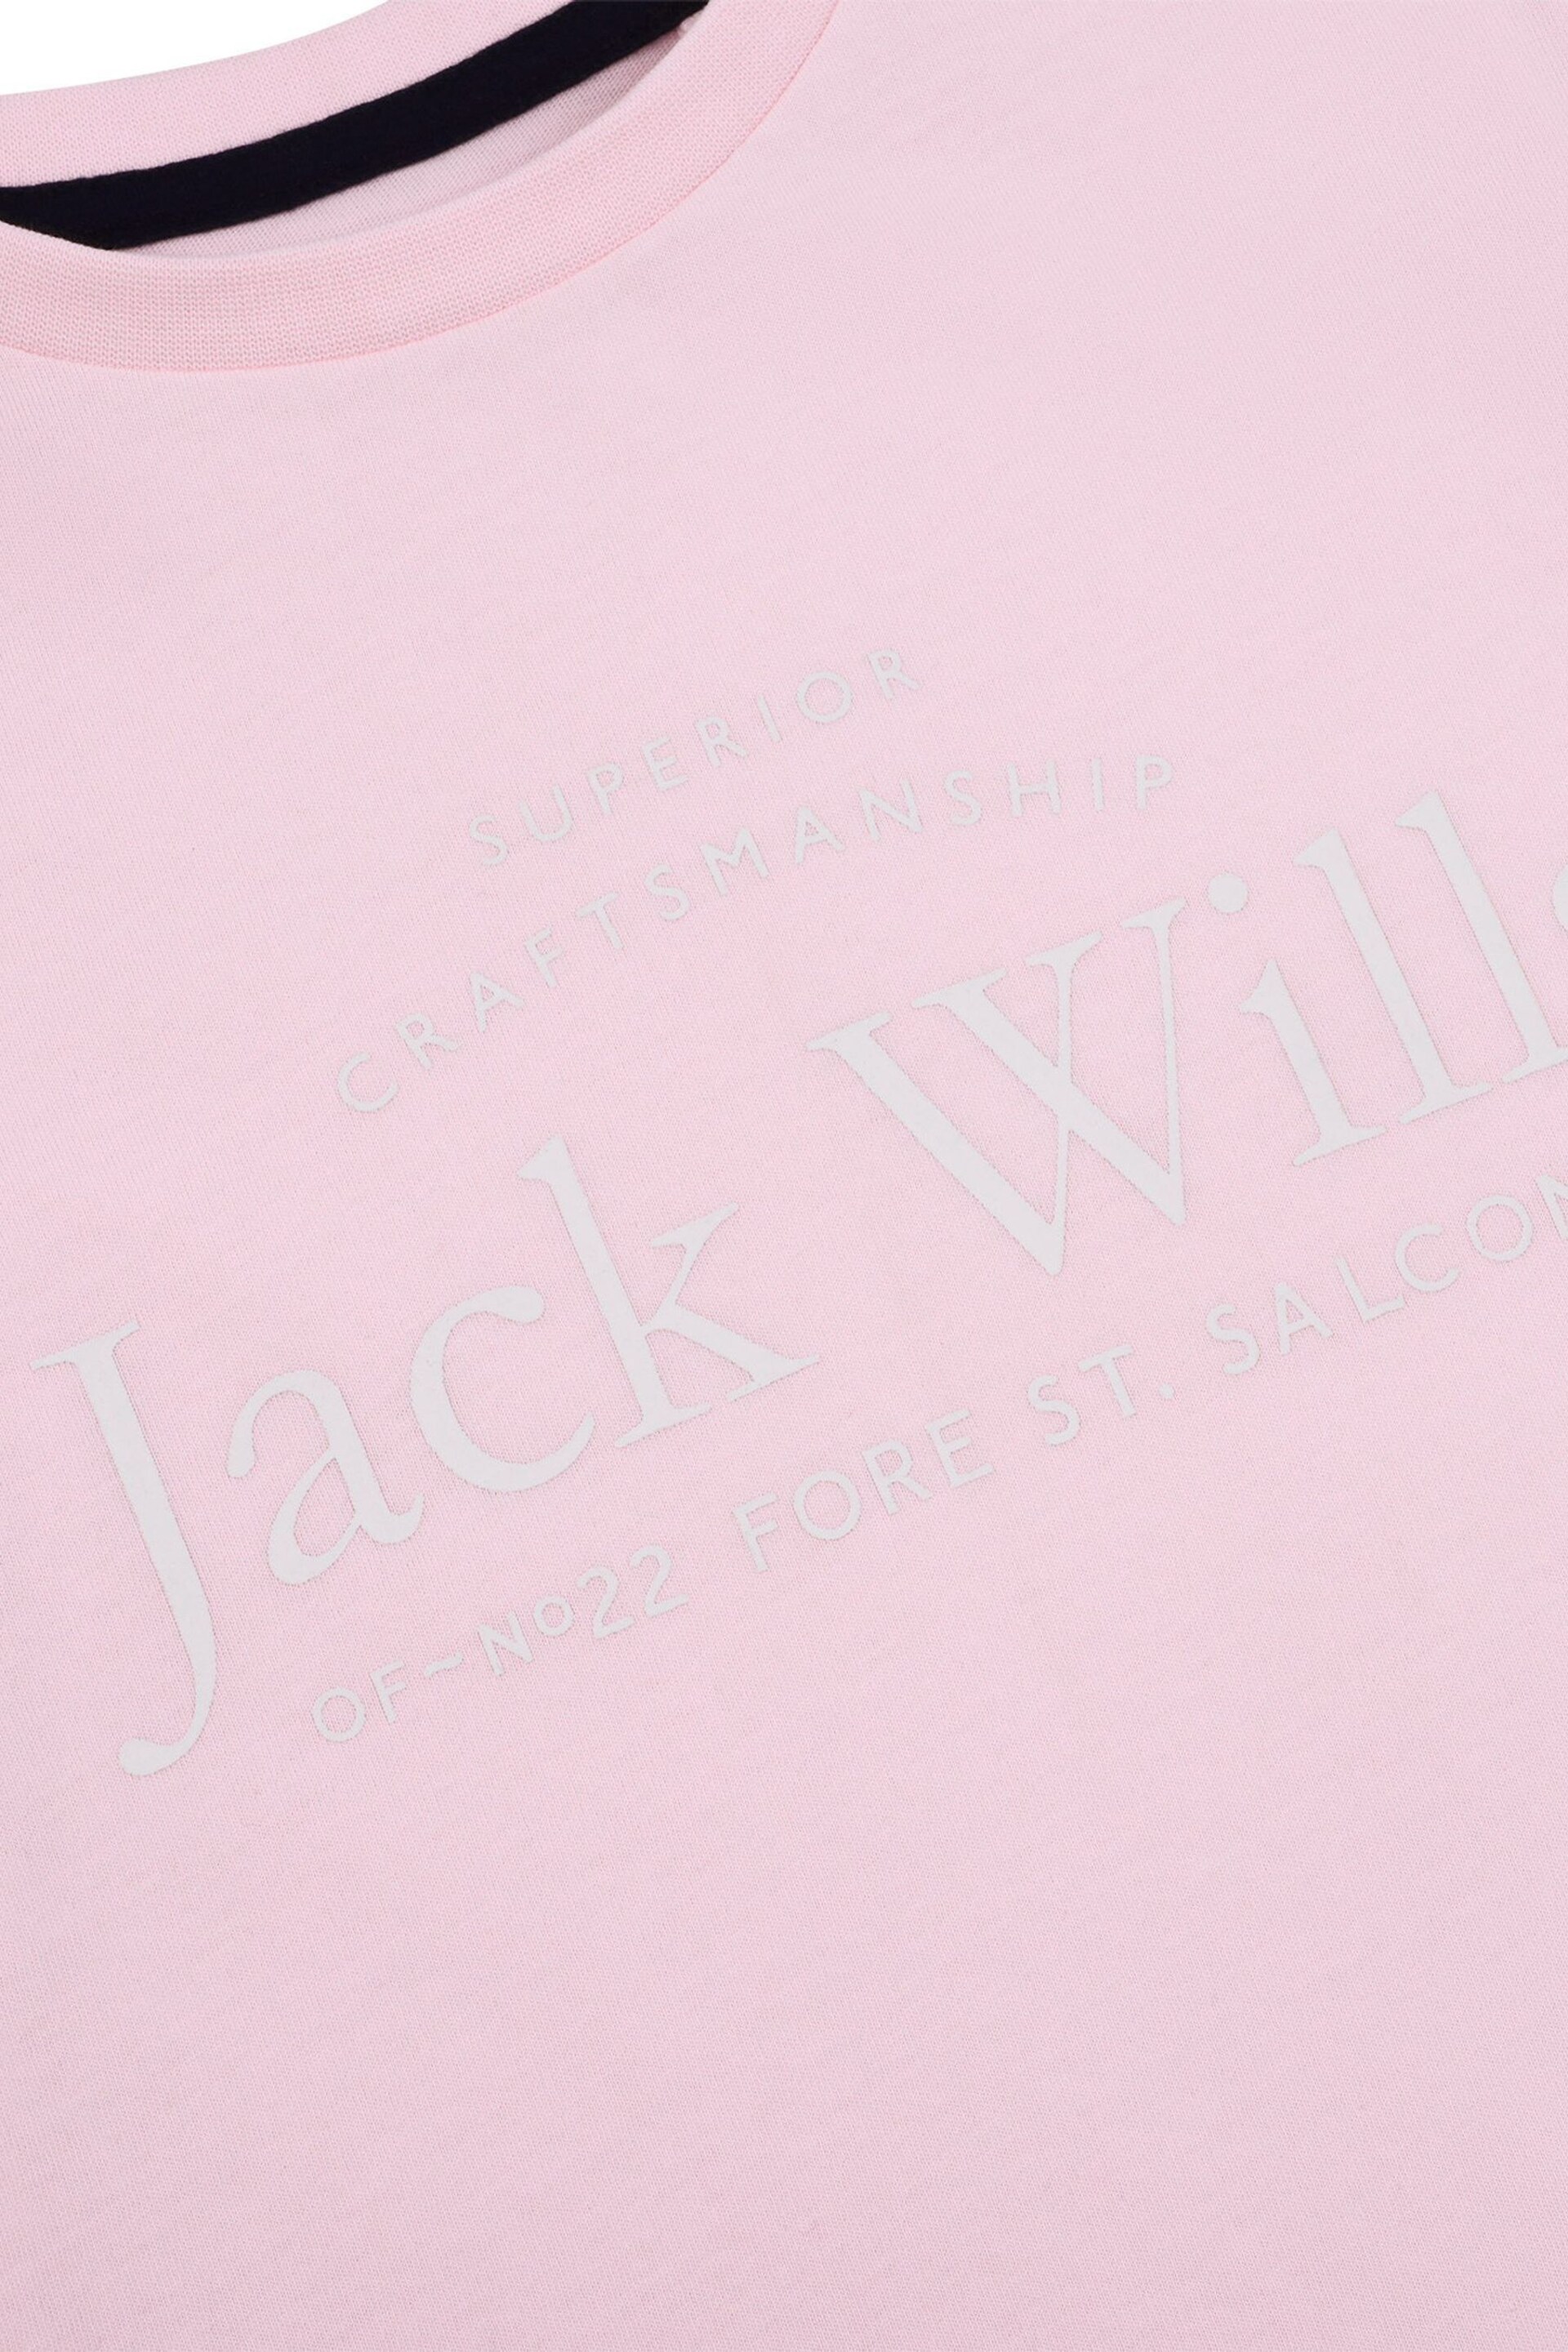 Jack Wills Pink Script T-Shirt - Image 6 of 6